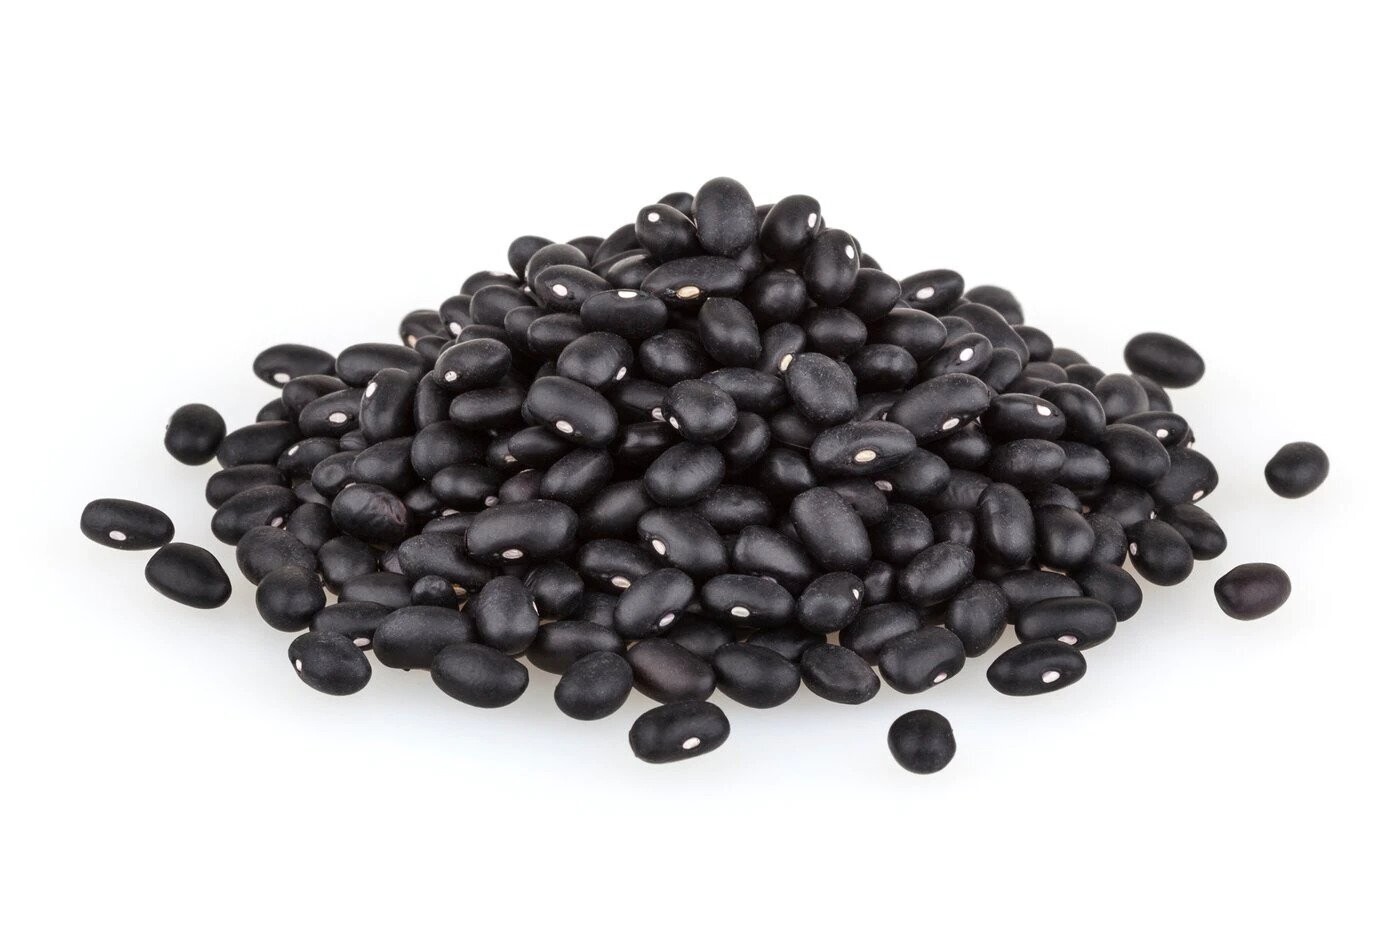 102 Black Beans Organic - 1 lb. (I4)